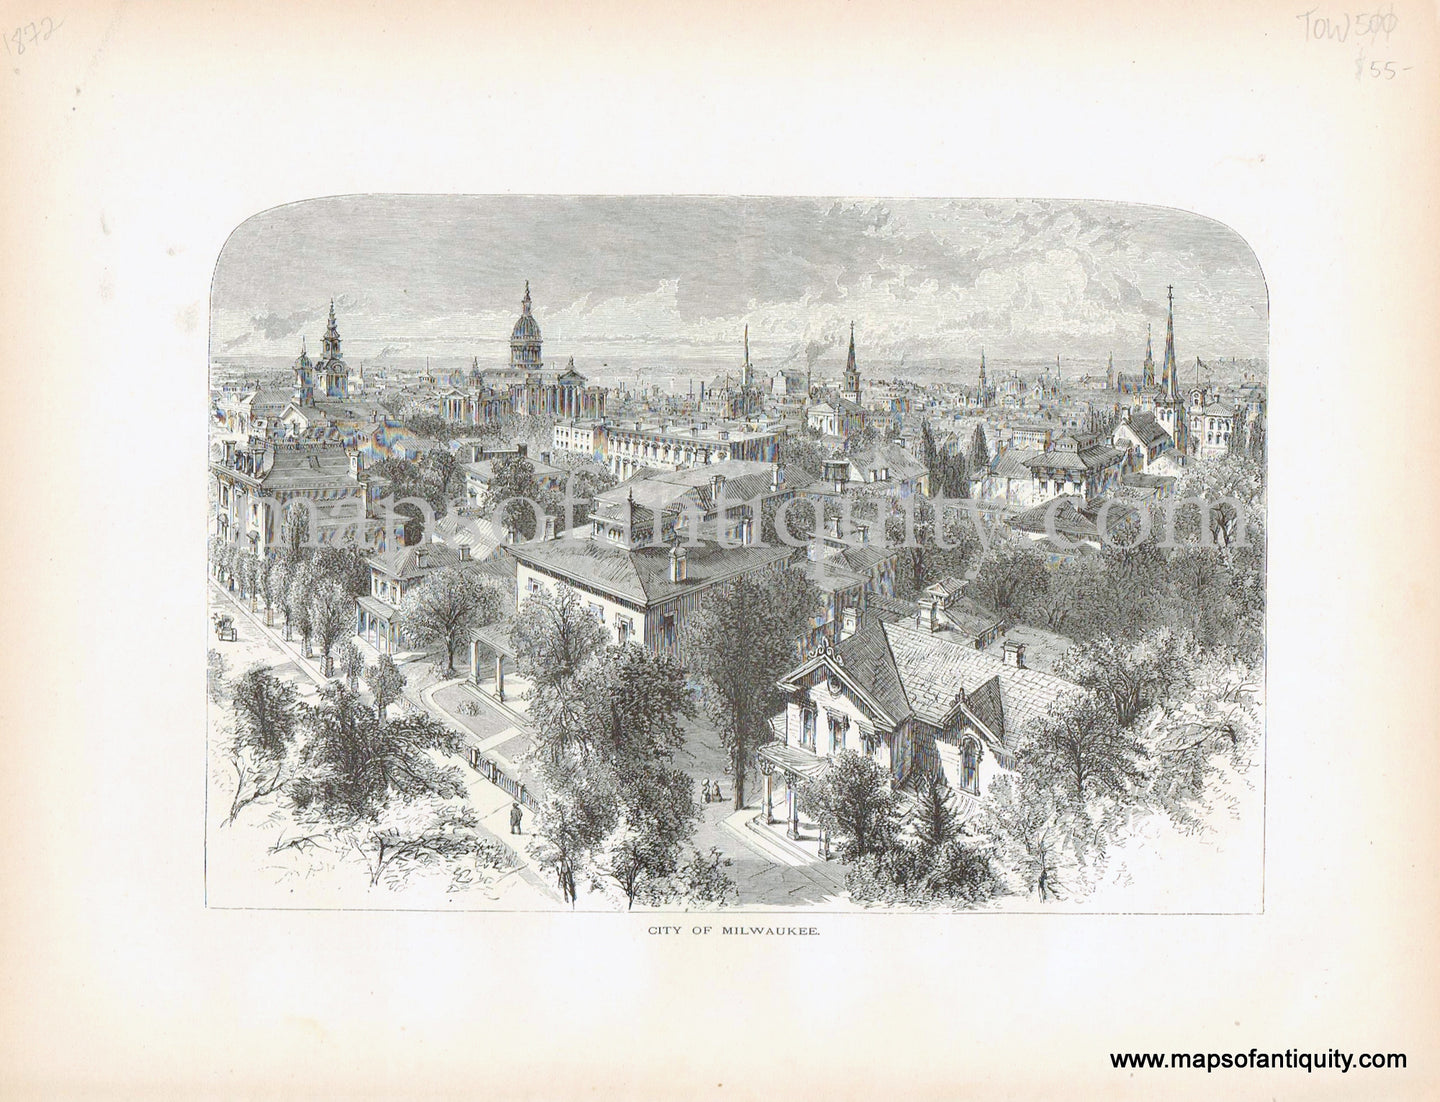 Antique-Print-Prints-City-of-Milwaukee-Wisconsin-1872-Picturesque-America-1800s-19th-century-maps-of-Antiquity